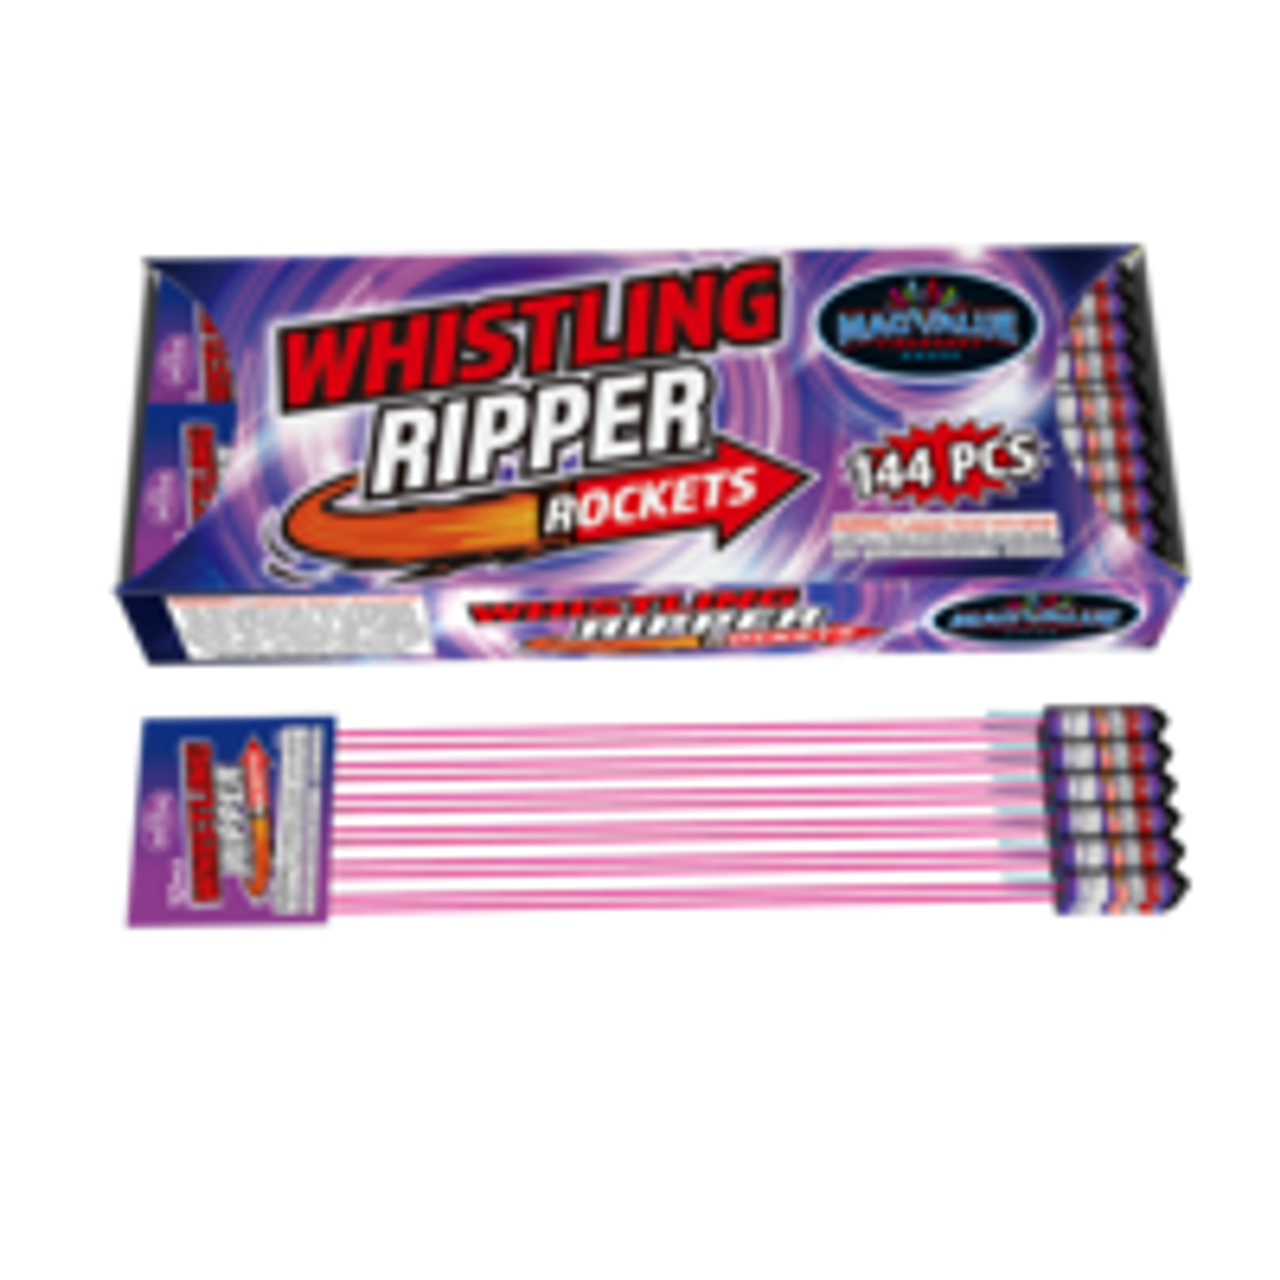 Triple Whistler Ripper Rocket